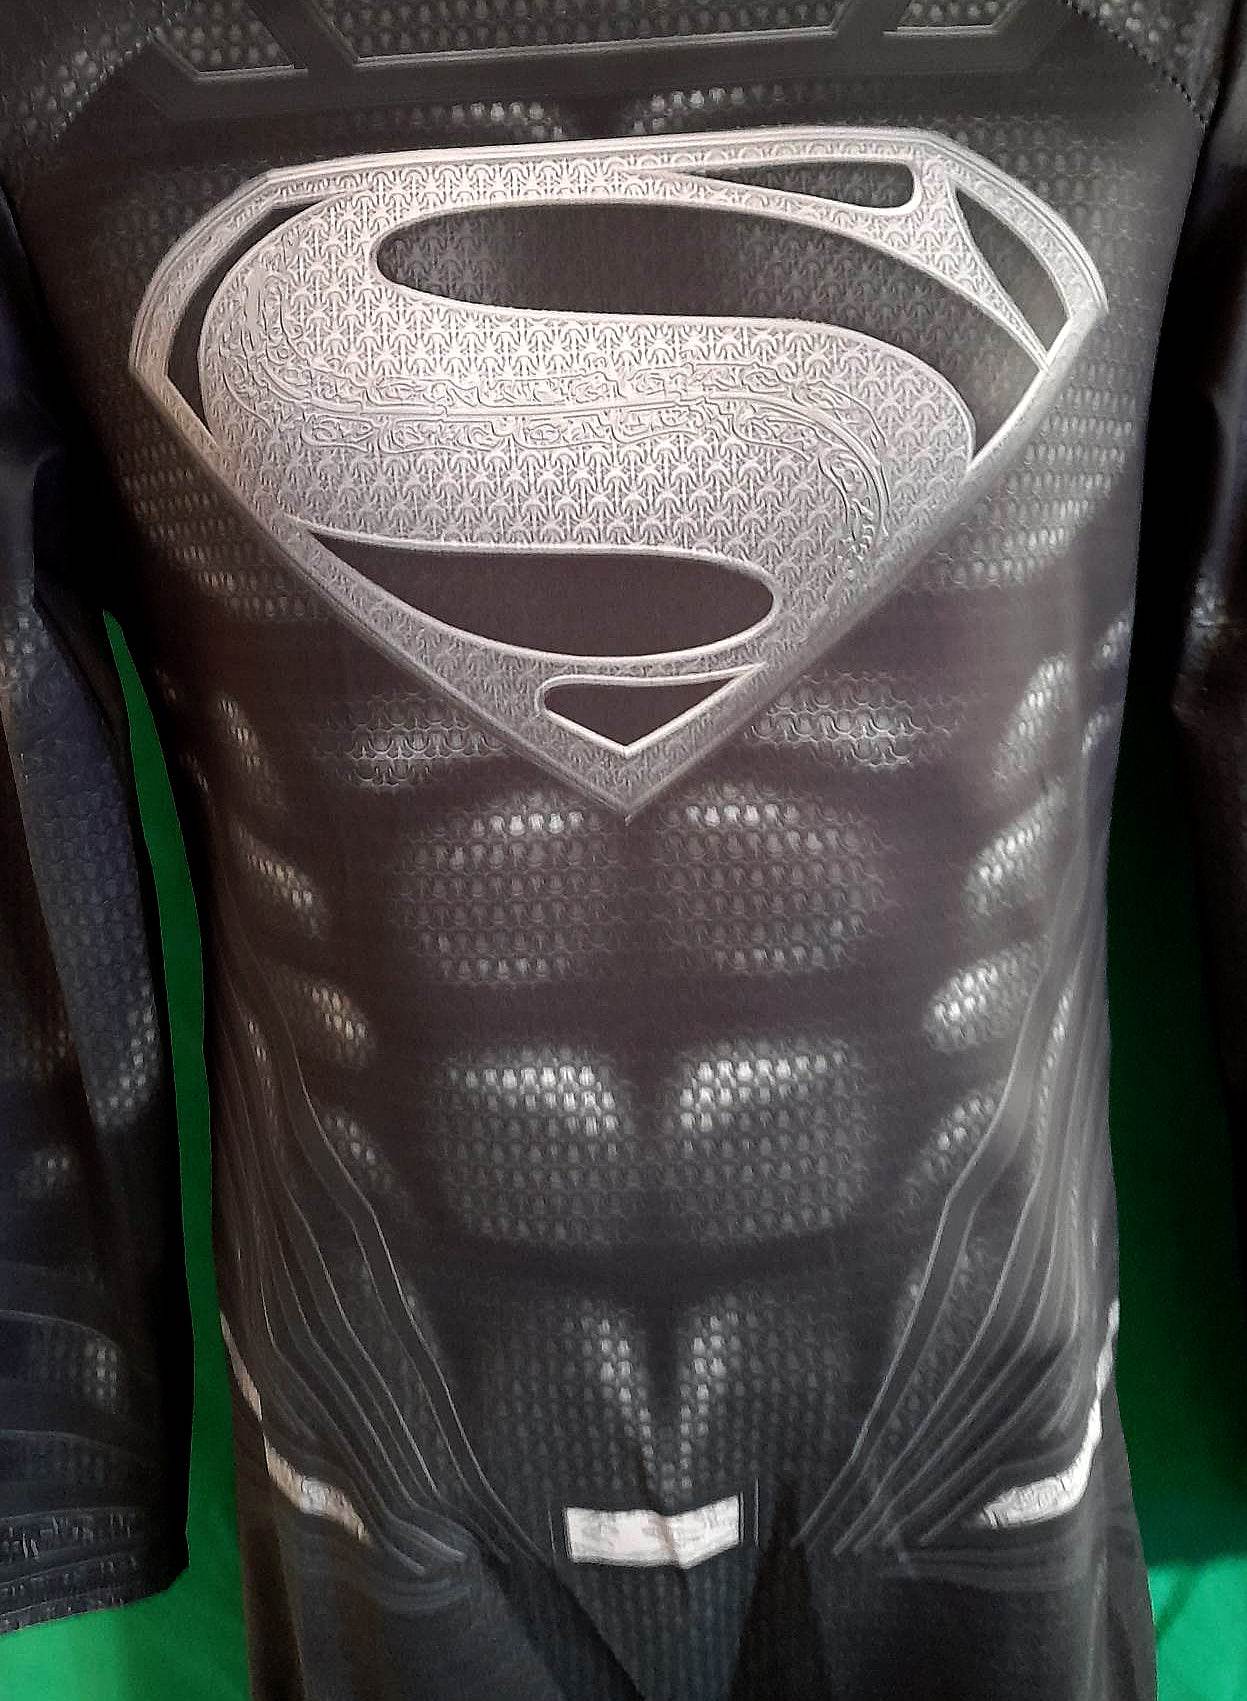 SUPERMAN BLACK SUIT - SupergeekDesigns